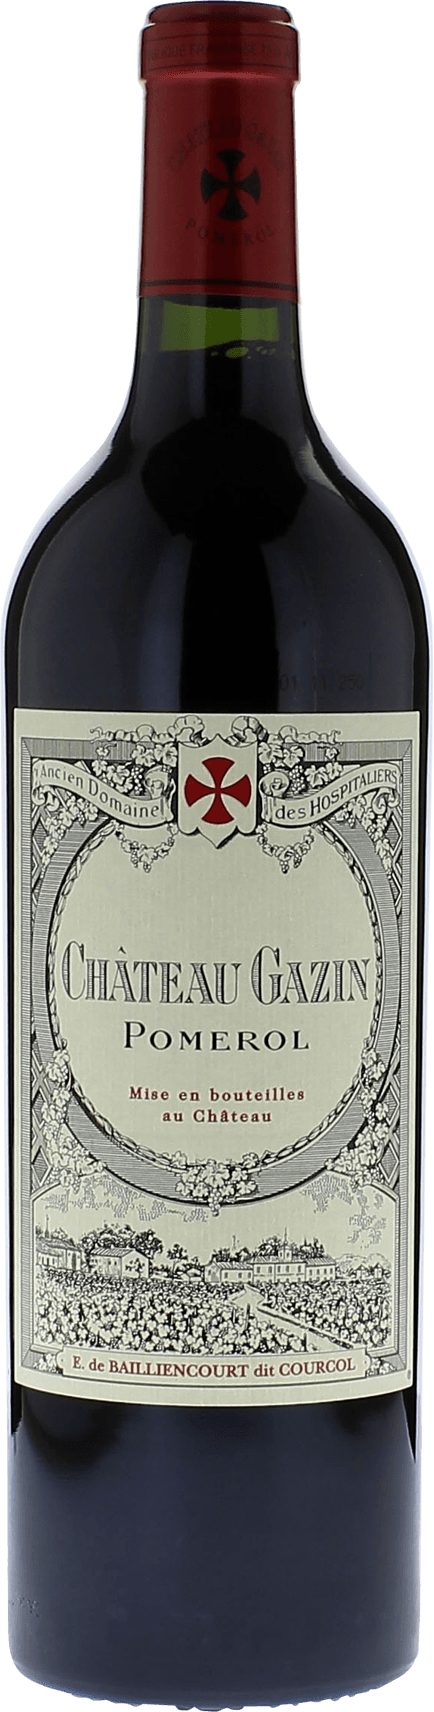 Gazin 2020  Pomerol, Bordeaux rouge